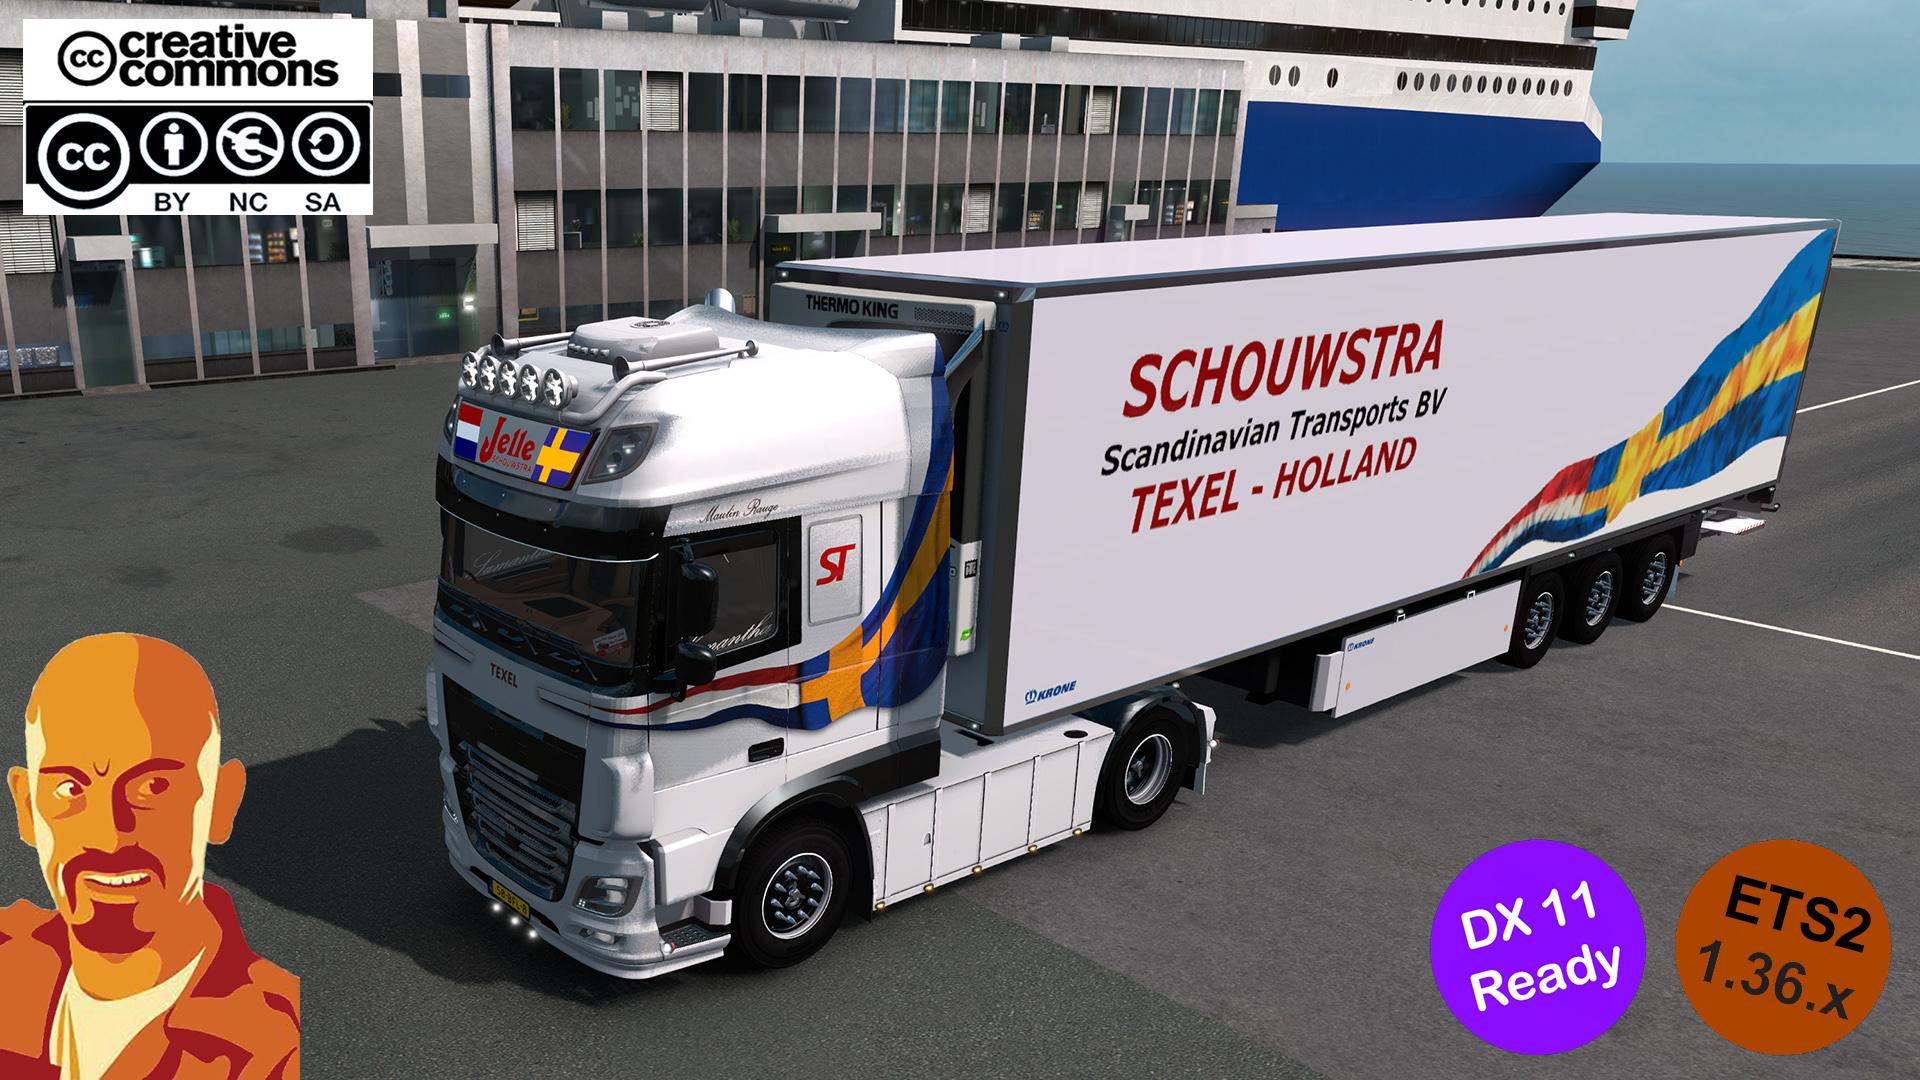 ETS2 Daf Jelle Schouwstra (1.36.x) Euro Truck Simulator 2